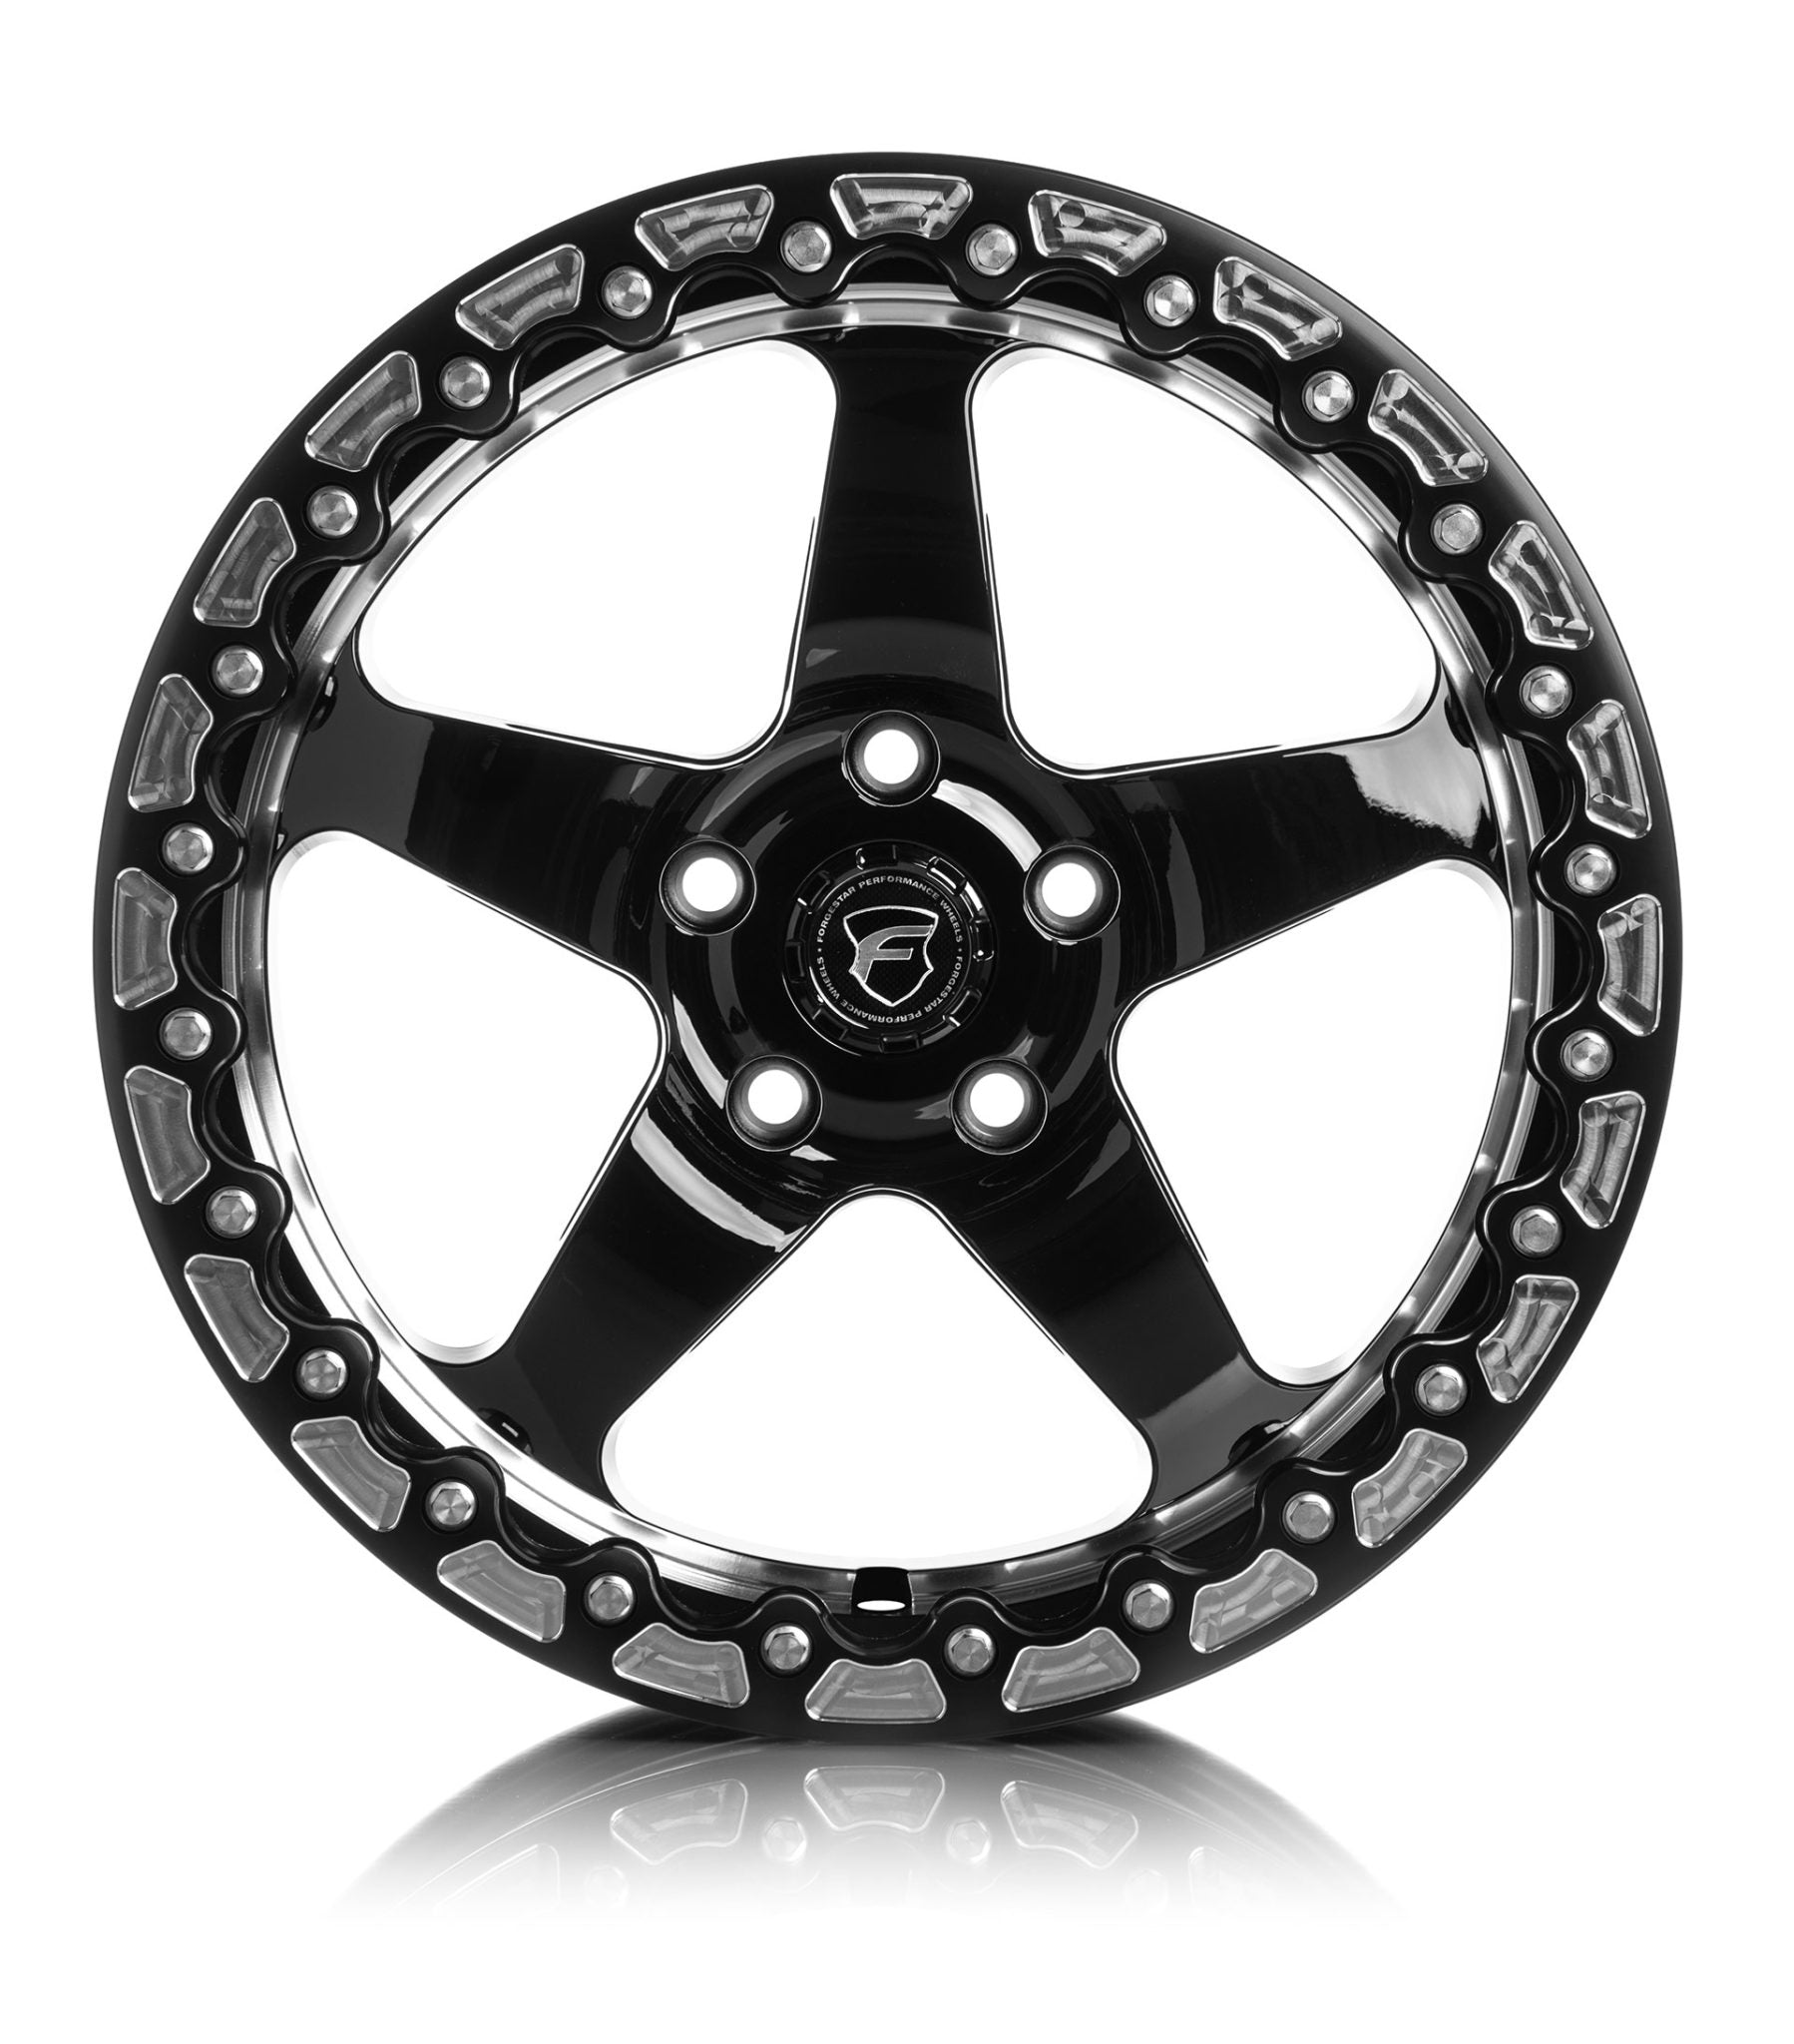 Forgestar D5 BEADLOCK Drag Racing Wheels - Gloss Black w/Machined Lip - 18x12 - Sold Individually - Motorsports LA